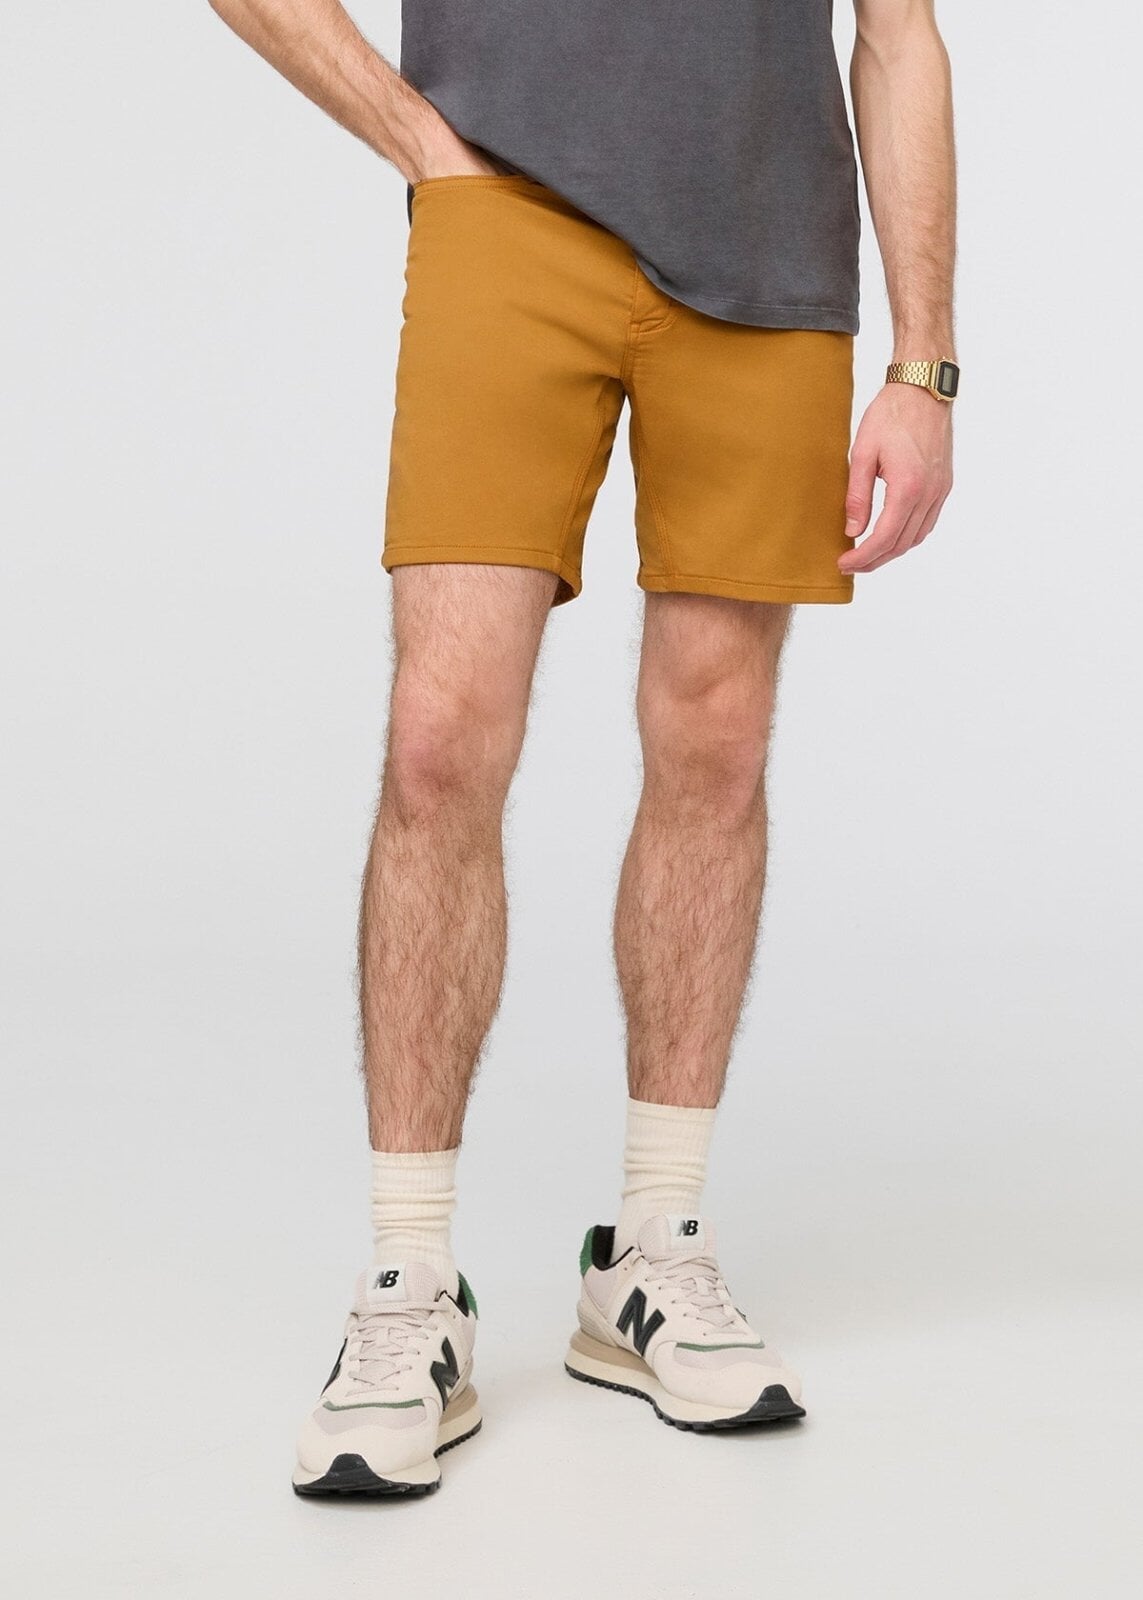 Men's Slim Shorts: Shop Slim Fit Shorts